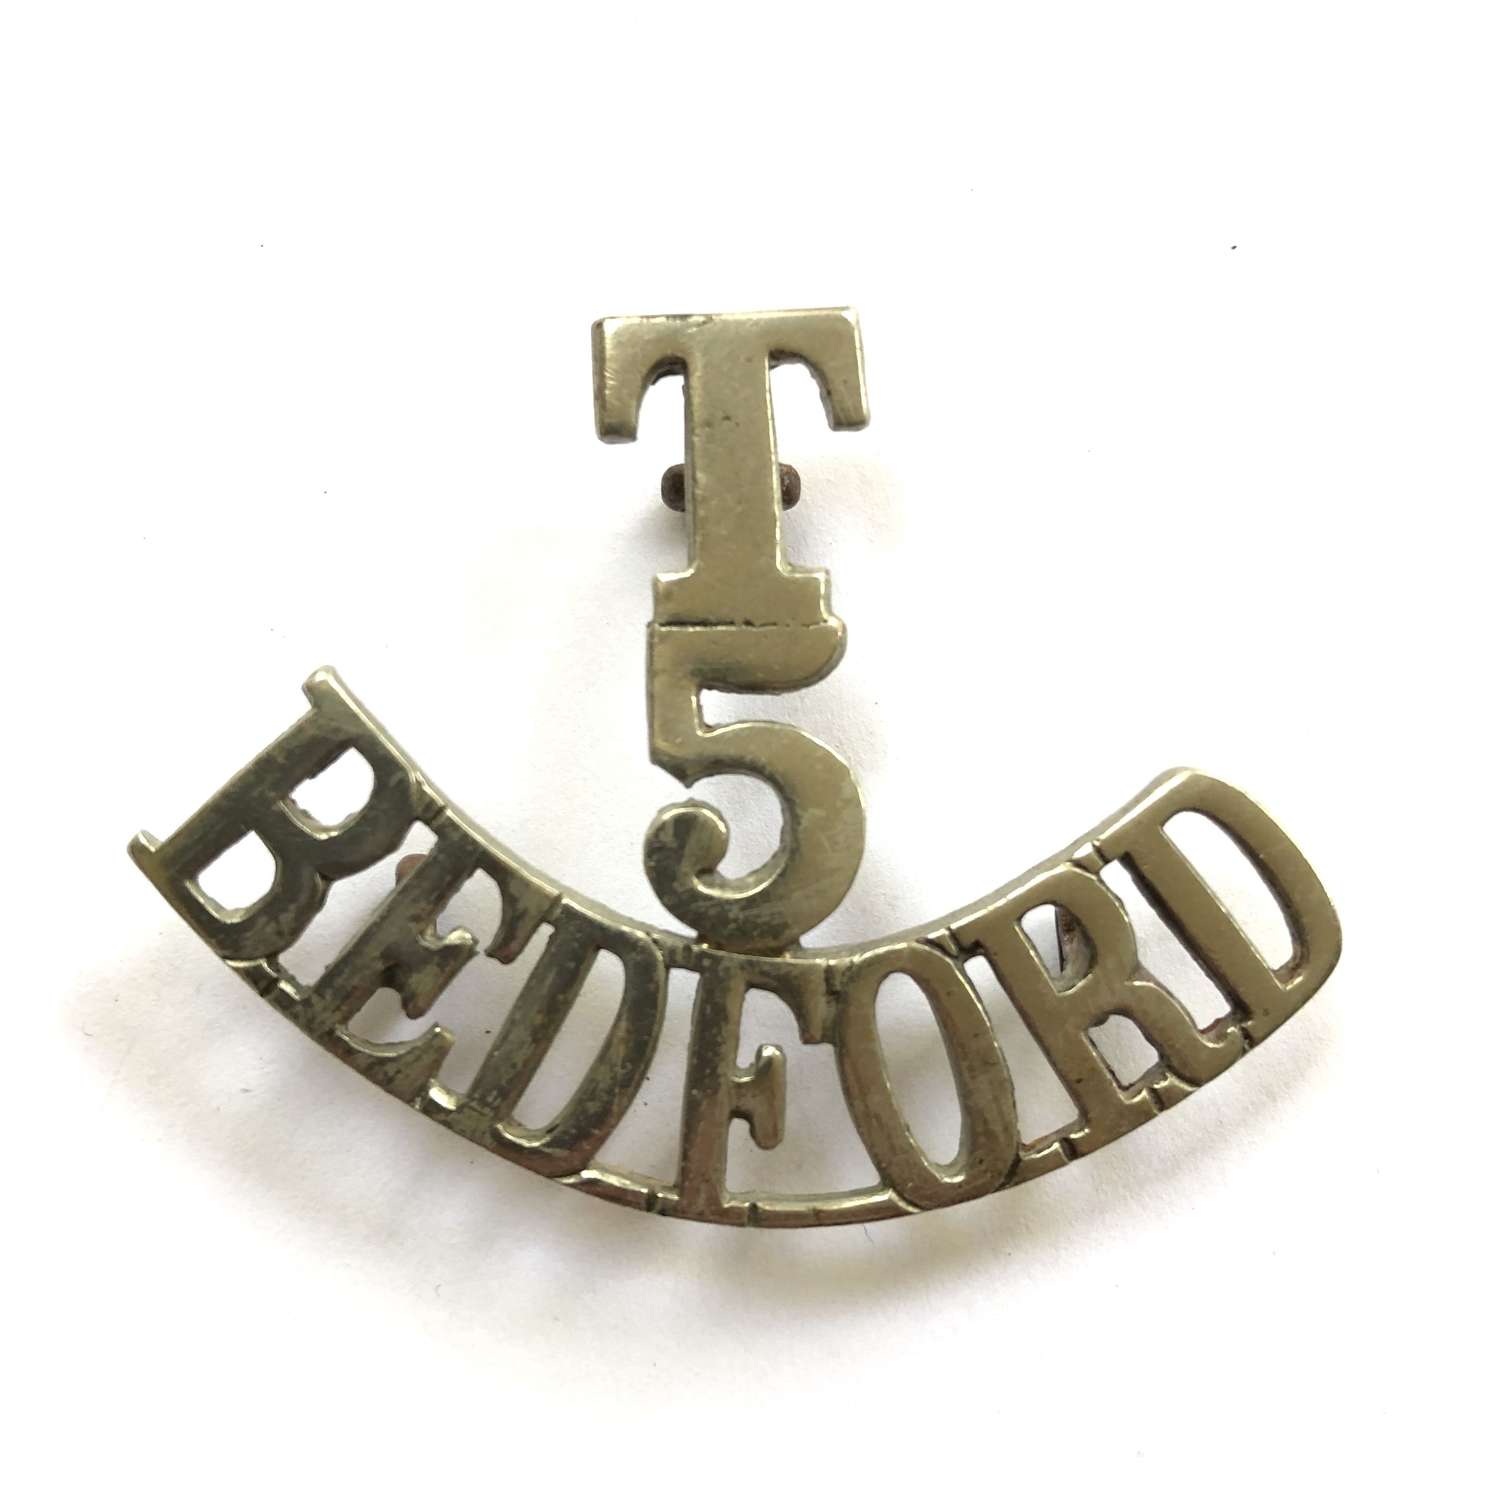 T / 5 / BEDFORD shoulder title circa 1908-19